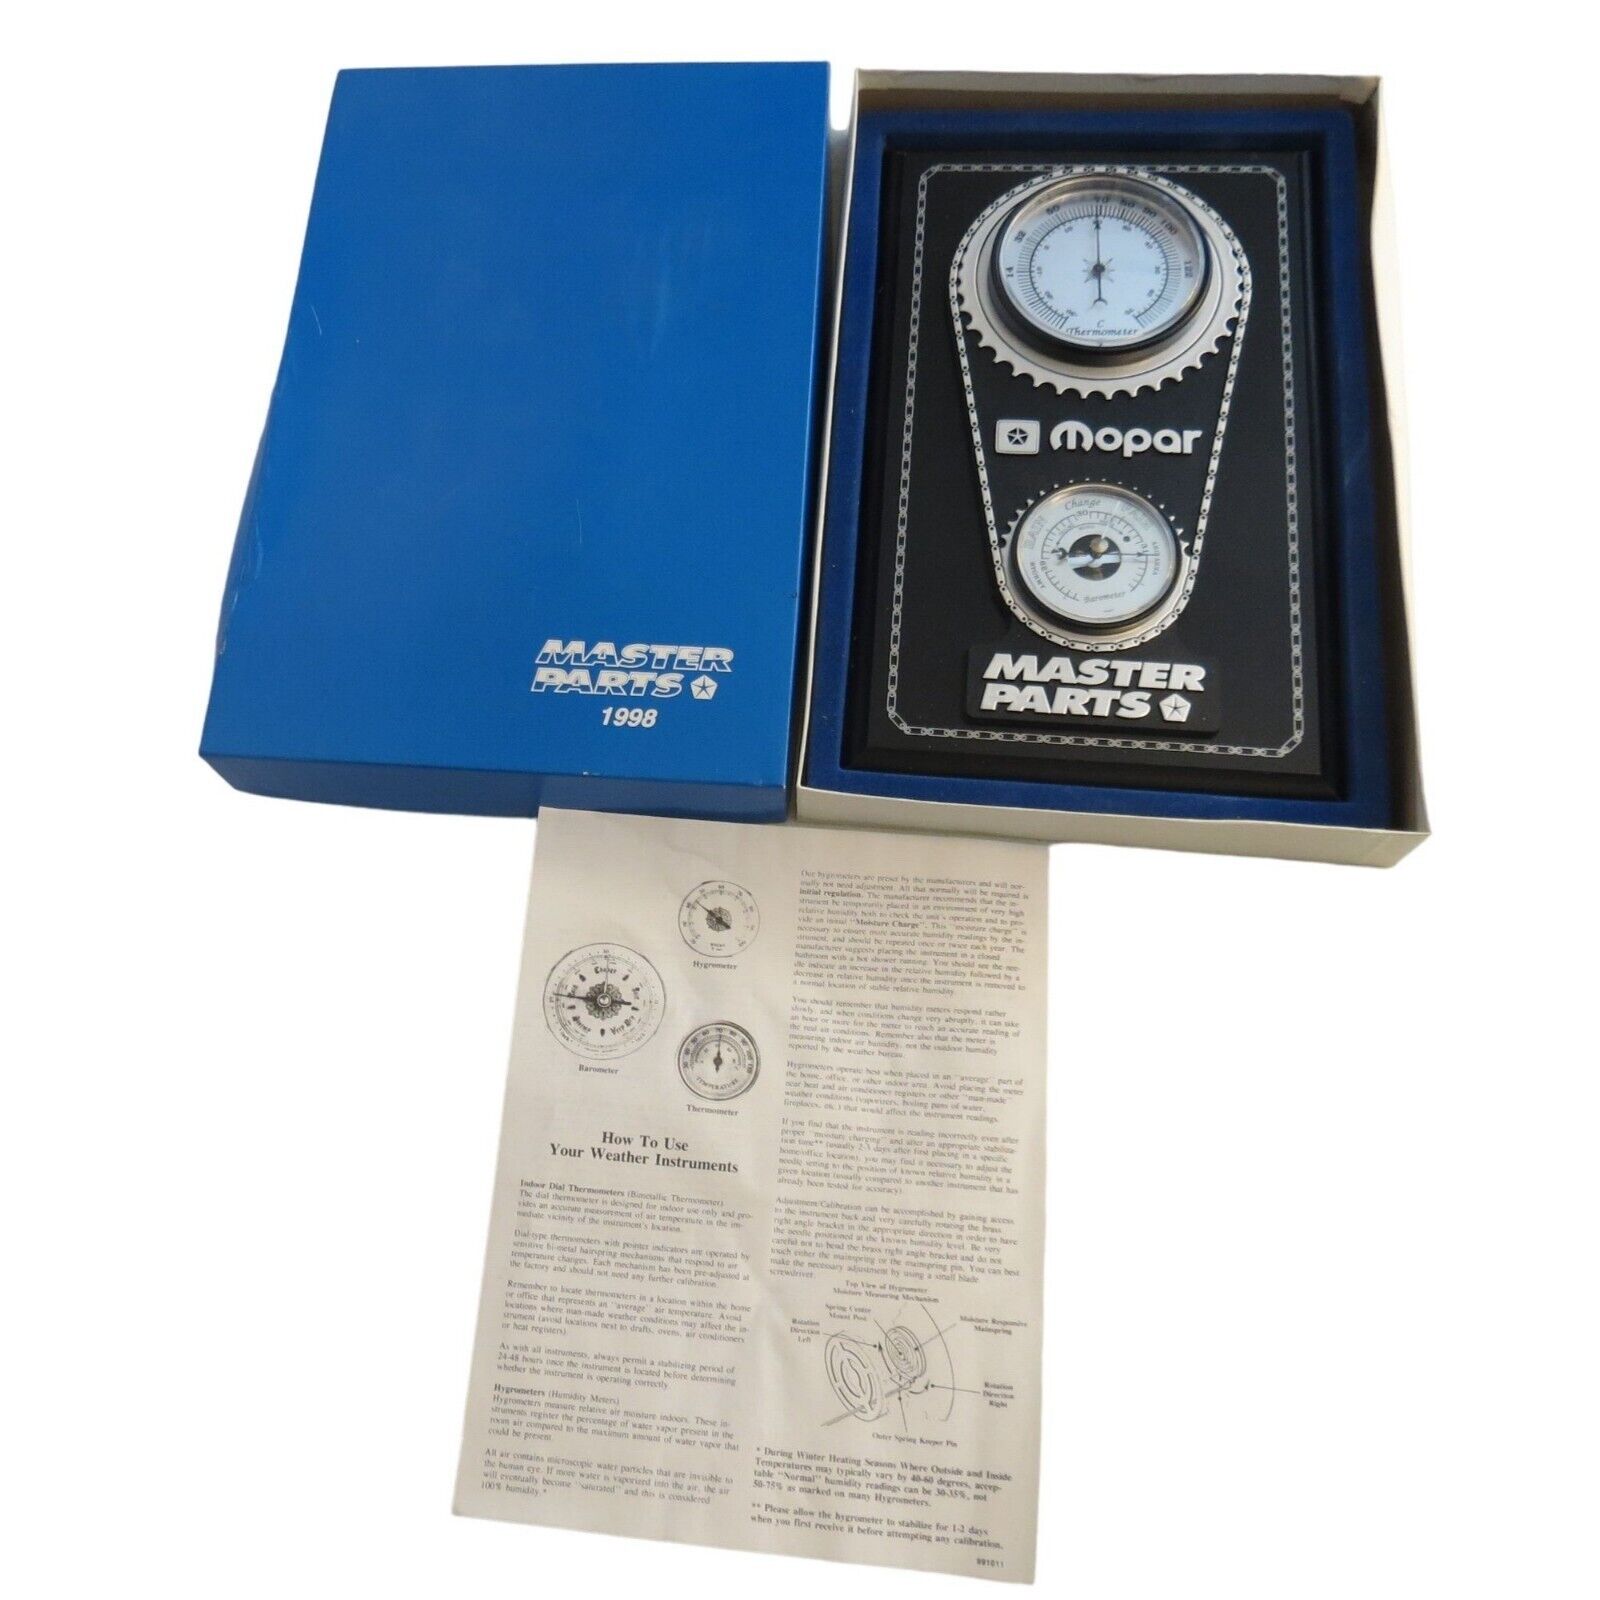 Chrysler Mopar Master Parts Award Plaque 1998 Wall Mount Thermometer Barometer